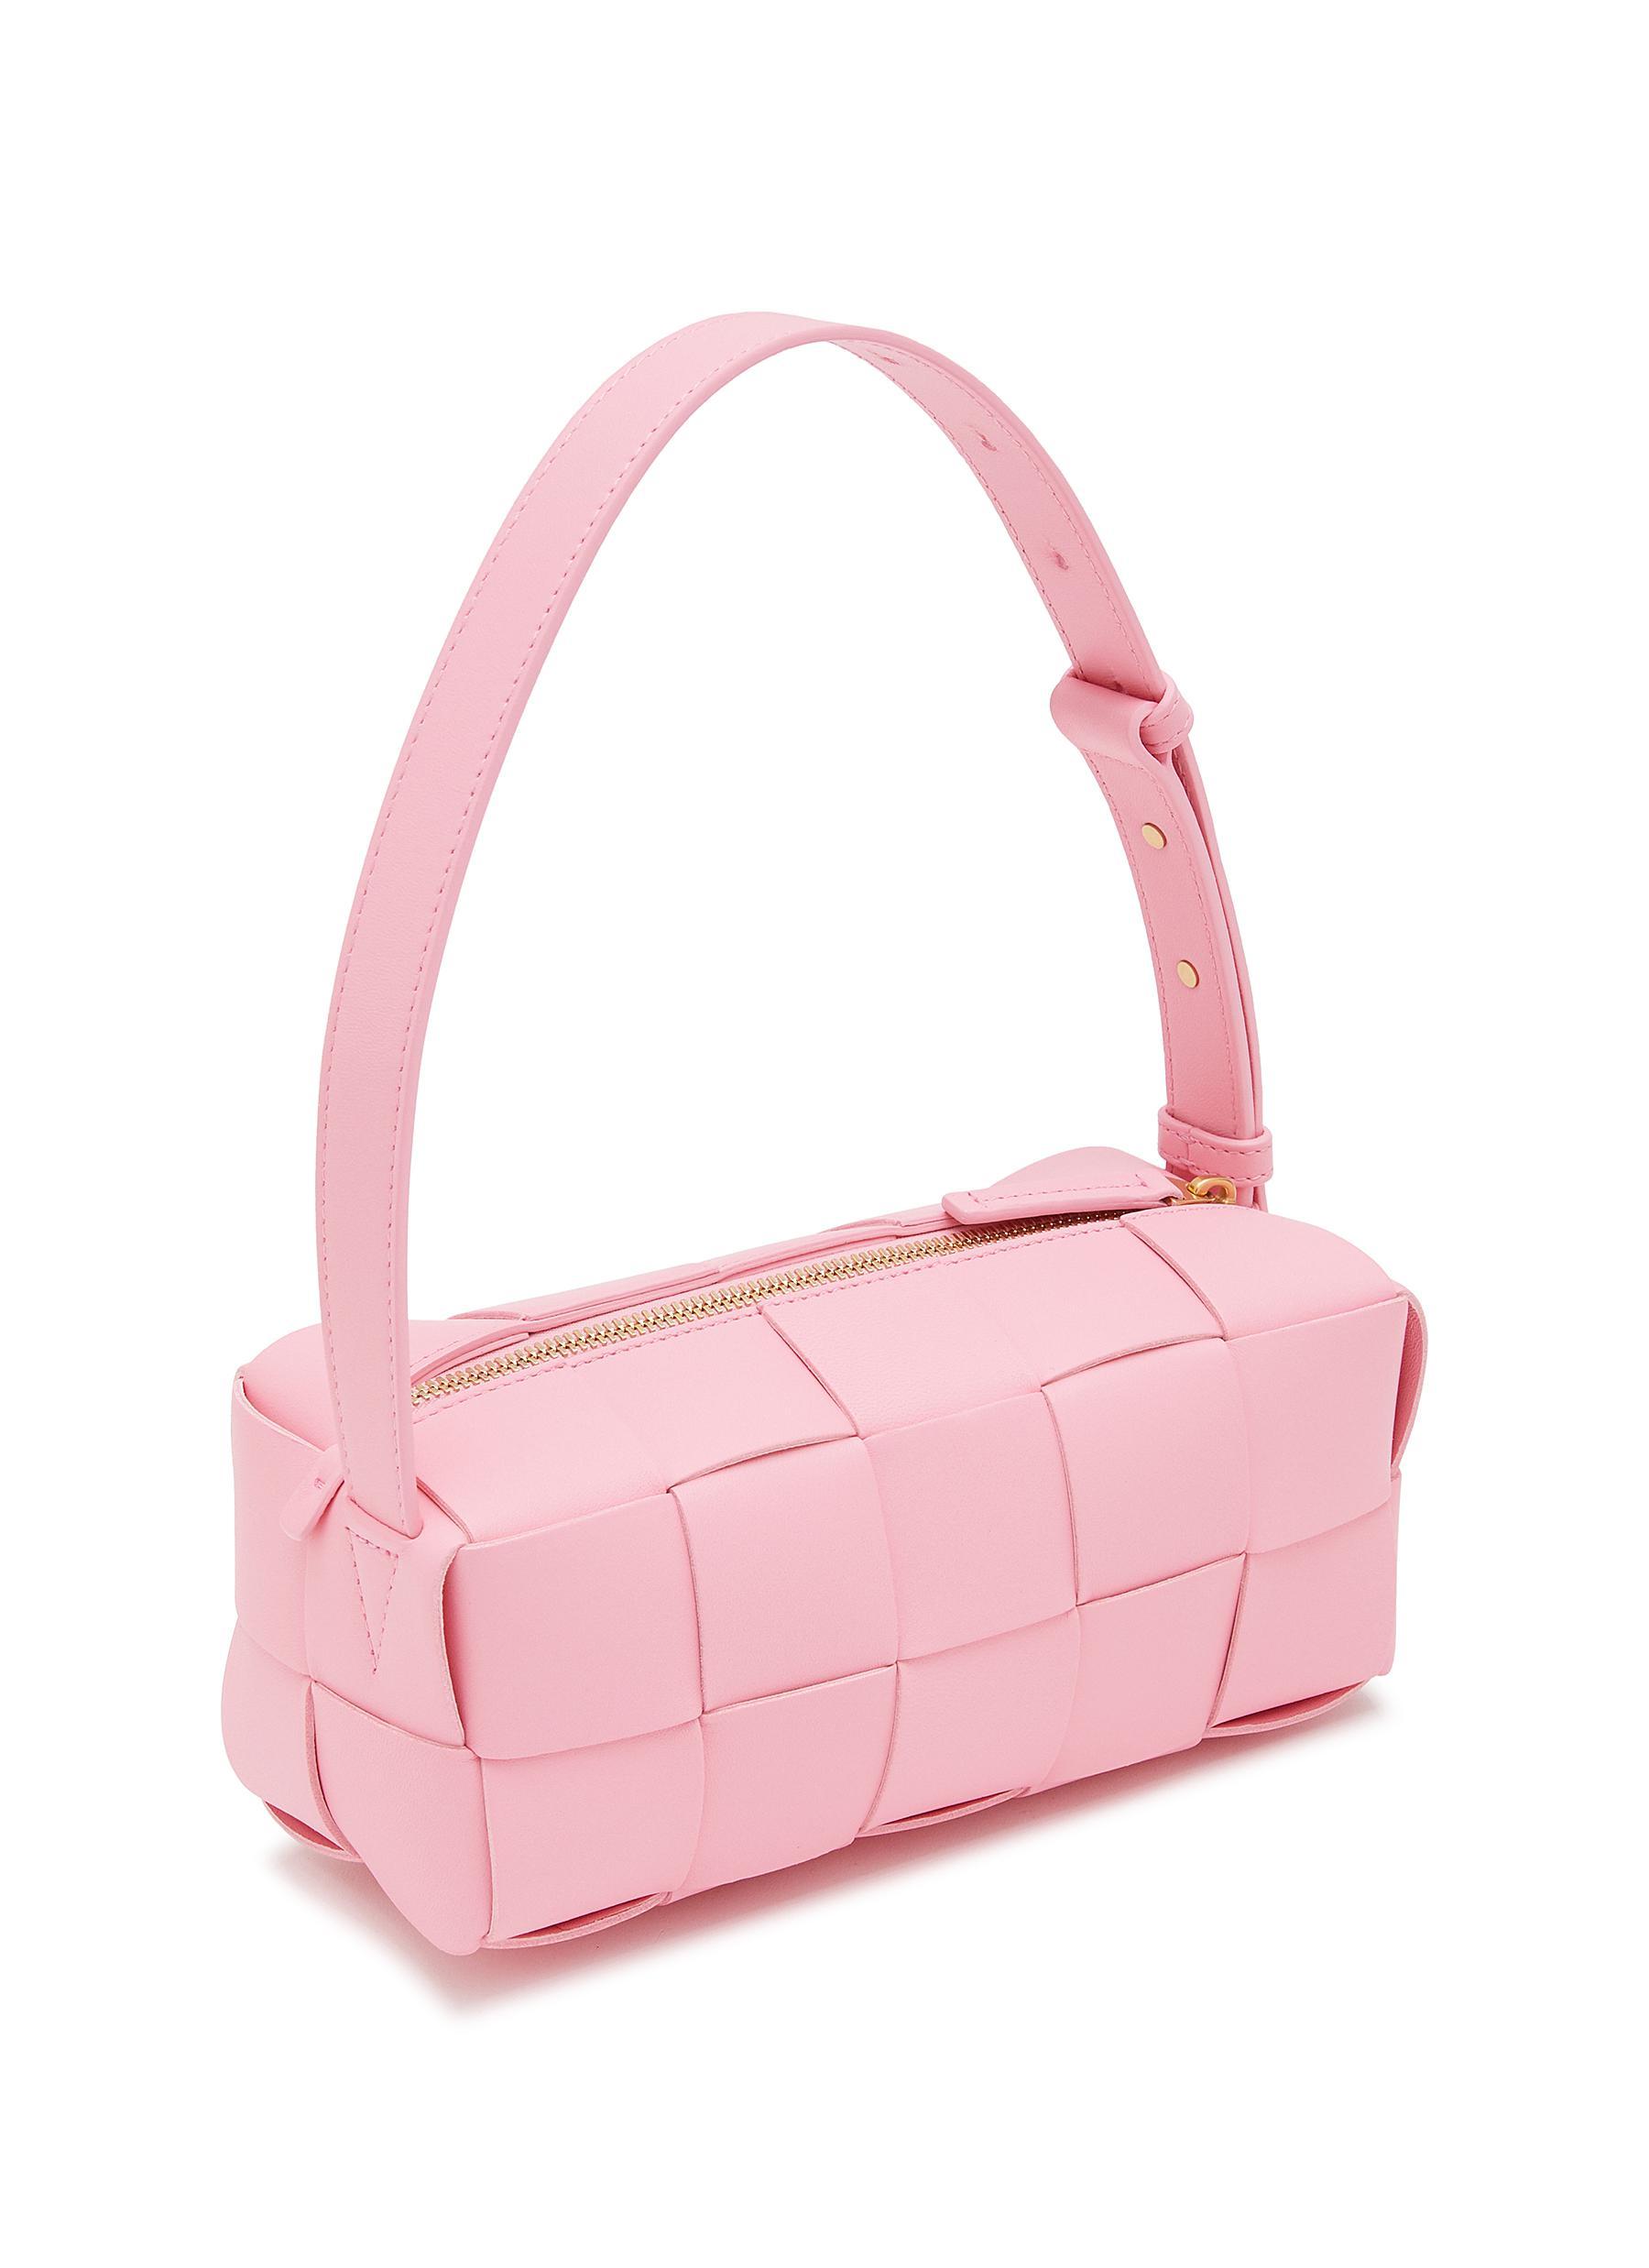 Bottega Veneta Light Pink Intrecciato Leather Cassette Shoulder Bag Bottega  Veneta